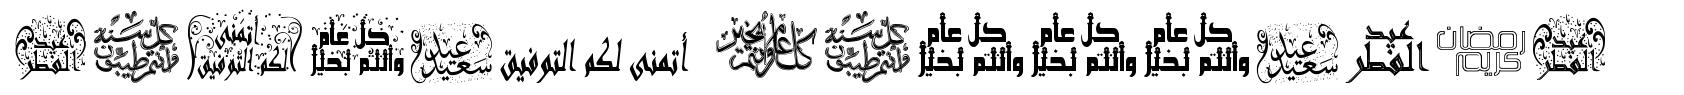 Arabic Greetings písmo